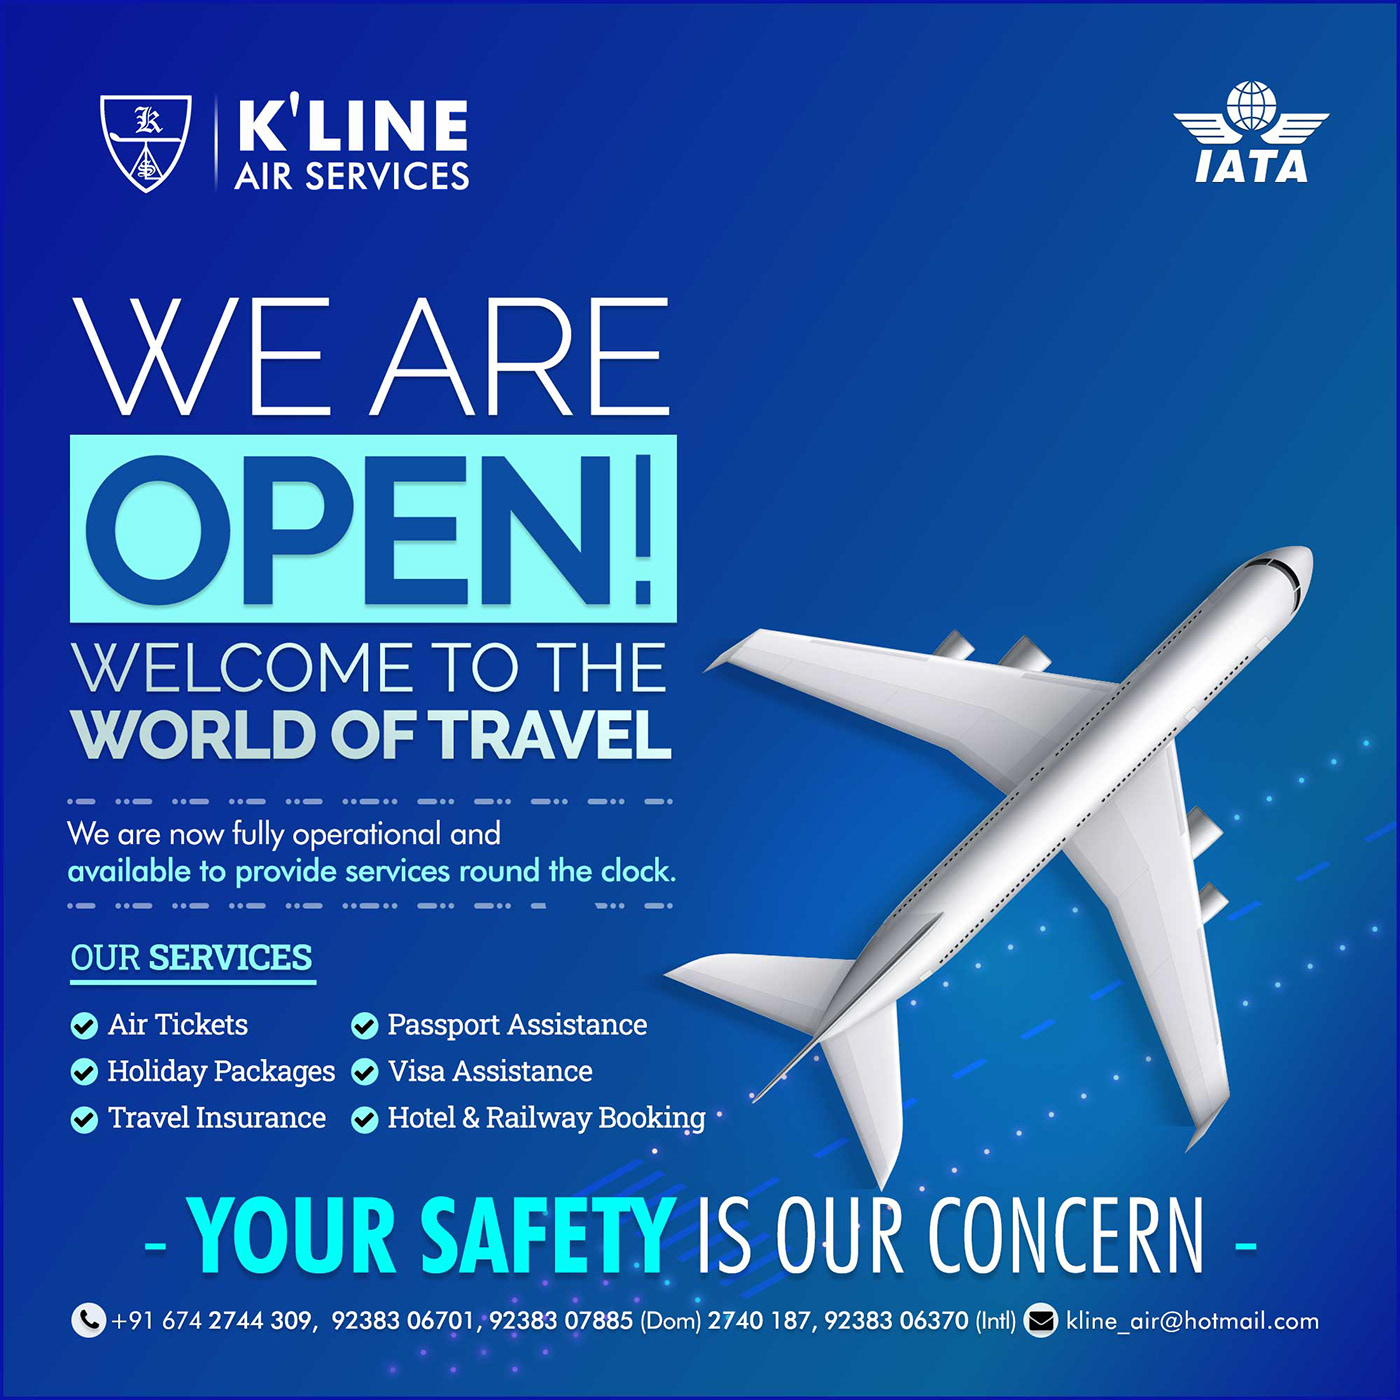 airline airservices Cargo iata Kline TicketBooking travels